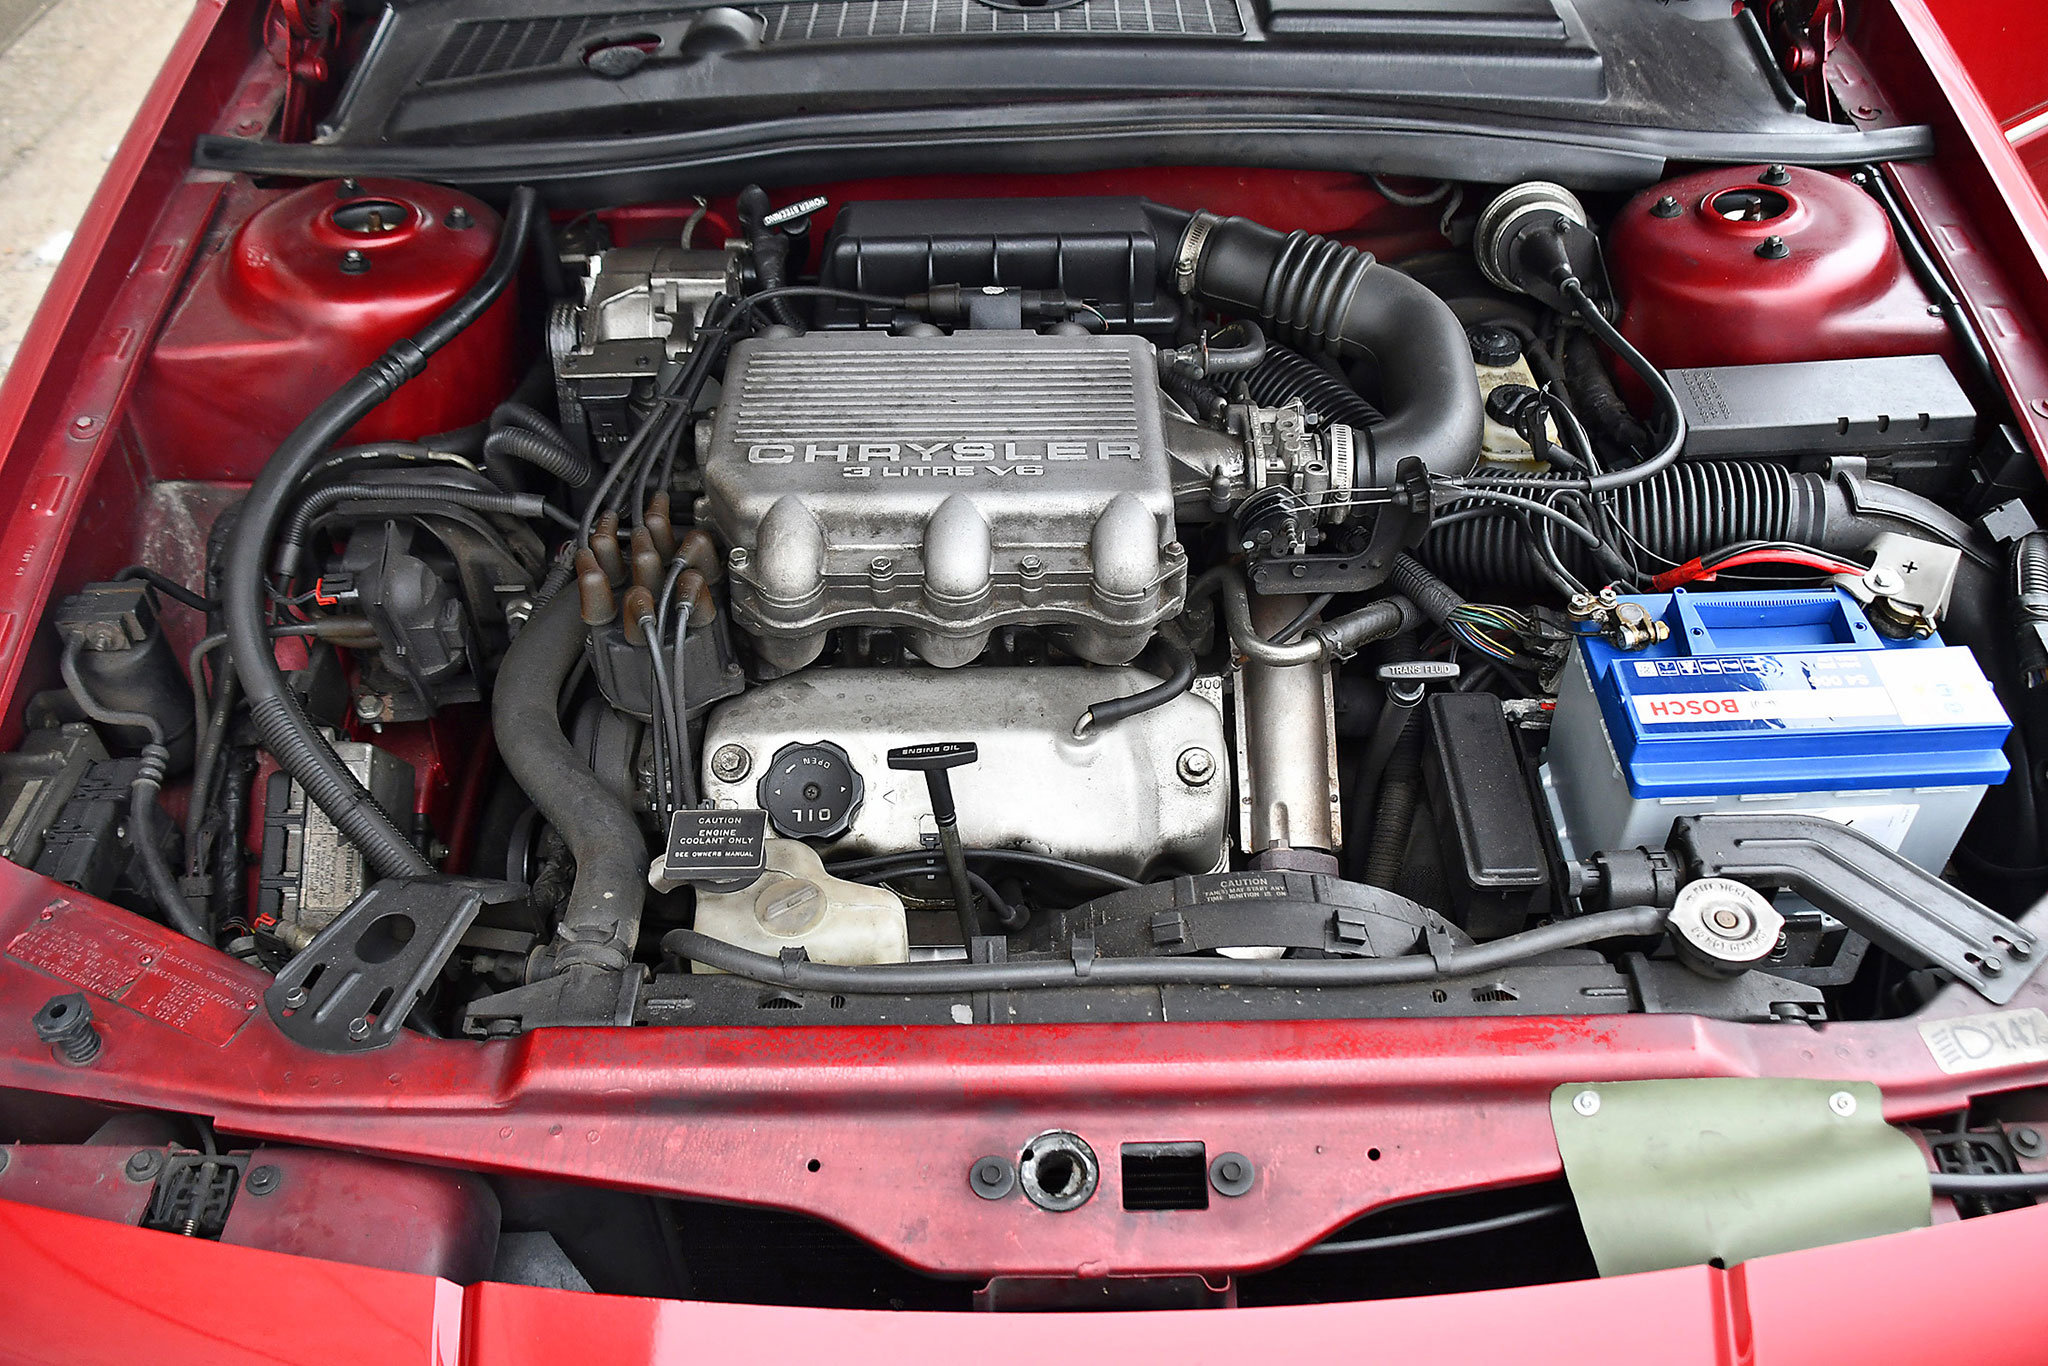 1994 Chrysler LeBaron 3.0 V6 LX – moteur V6 de 3.0-Litre d’origine Mitsubishi avec 136 chevaux.